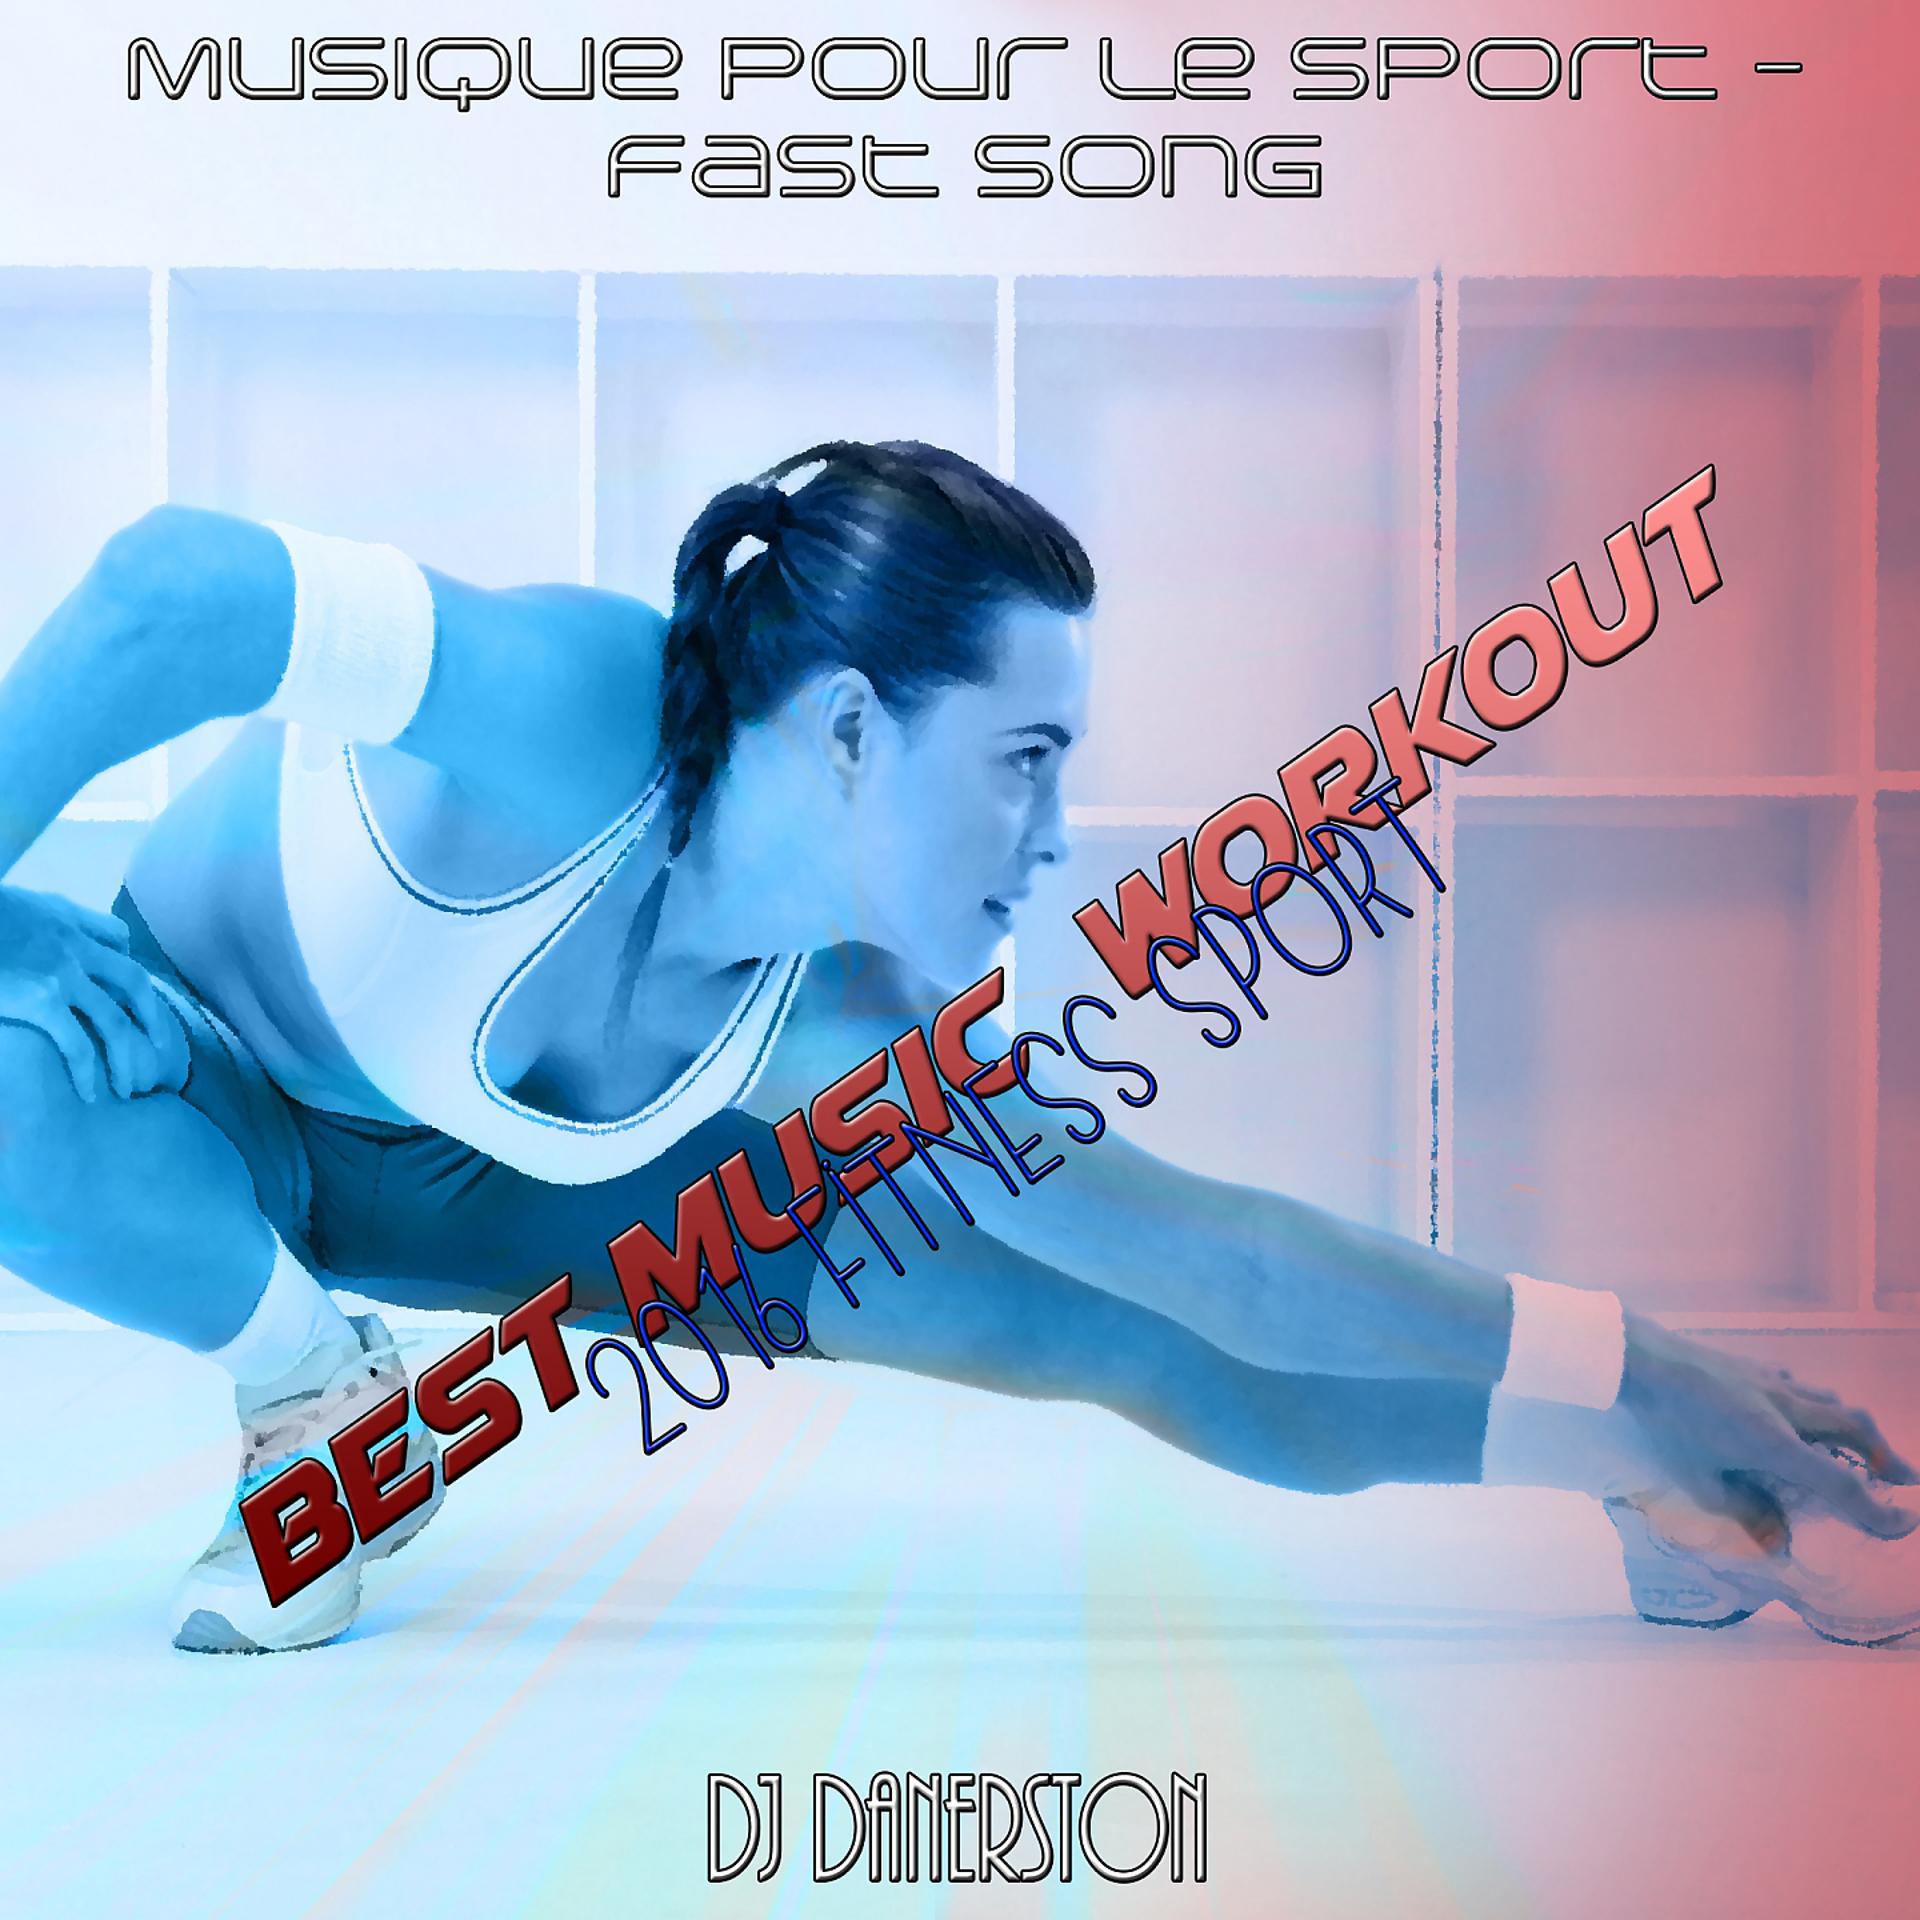 Постер альбома Best Music Workout 2016 Fitness Sport